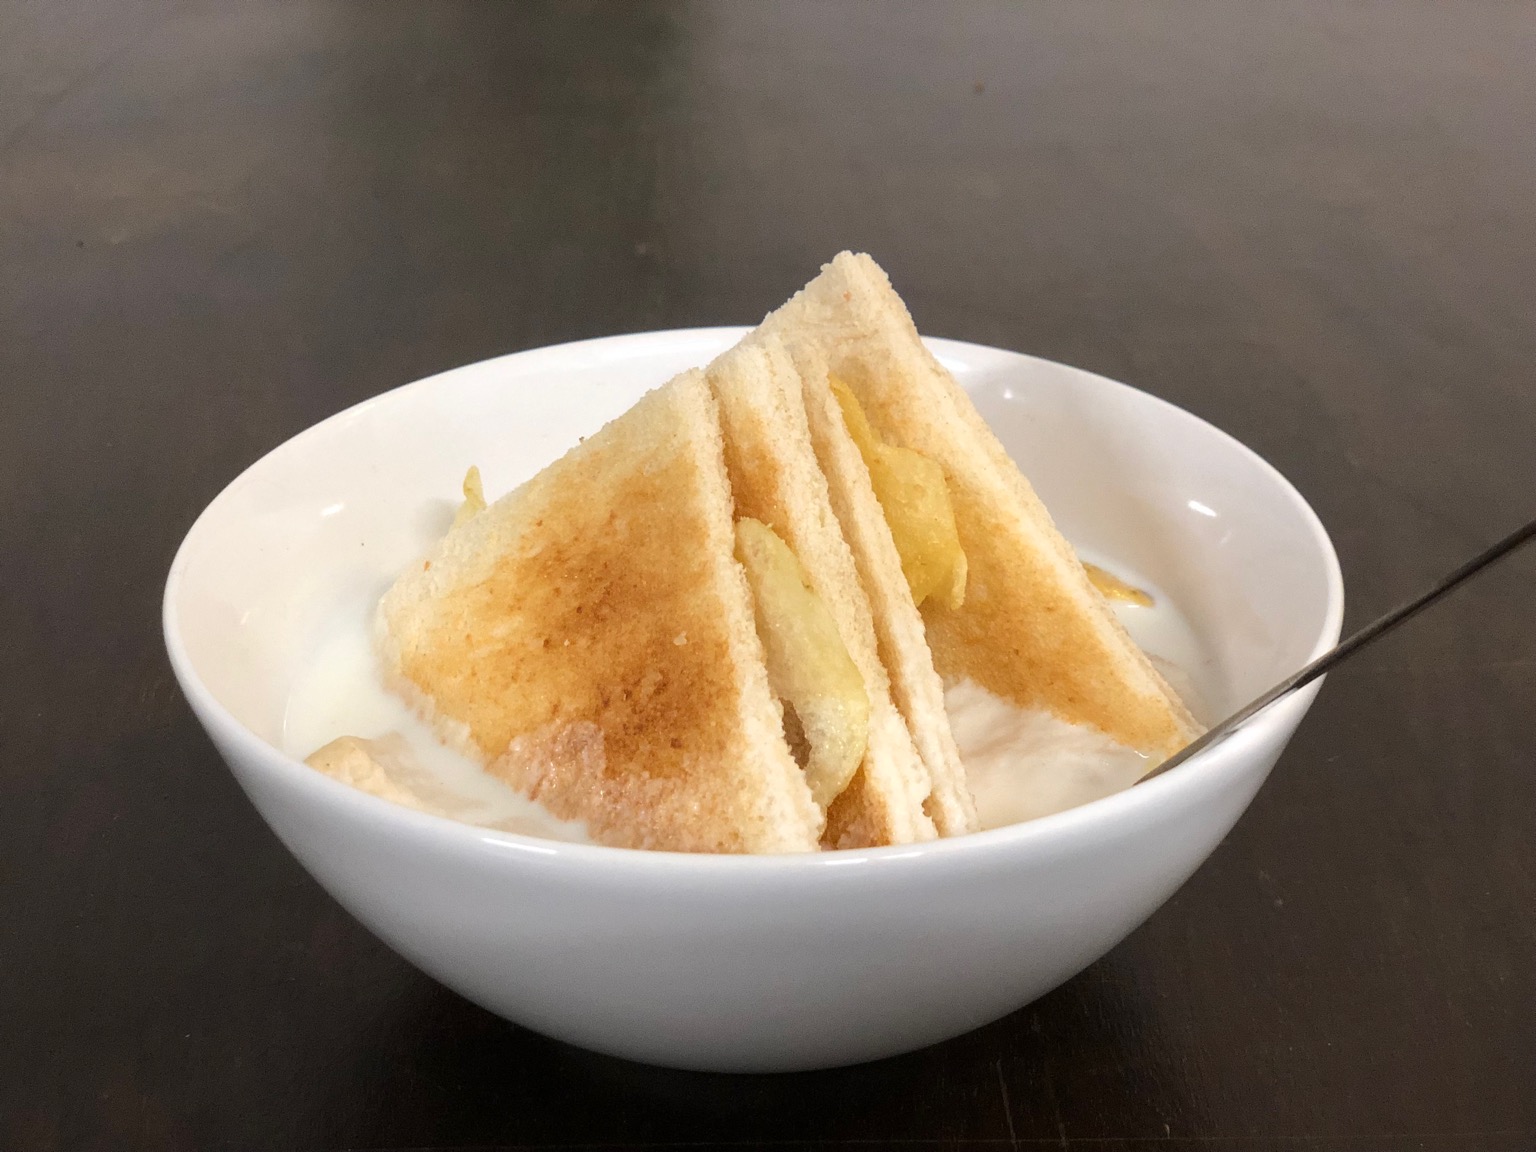 Crustless toasted crisp sandwich in a bowl of milk